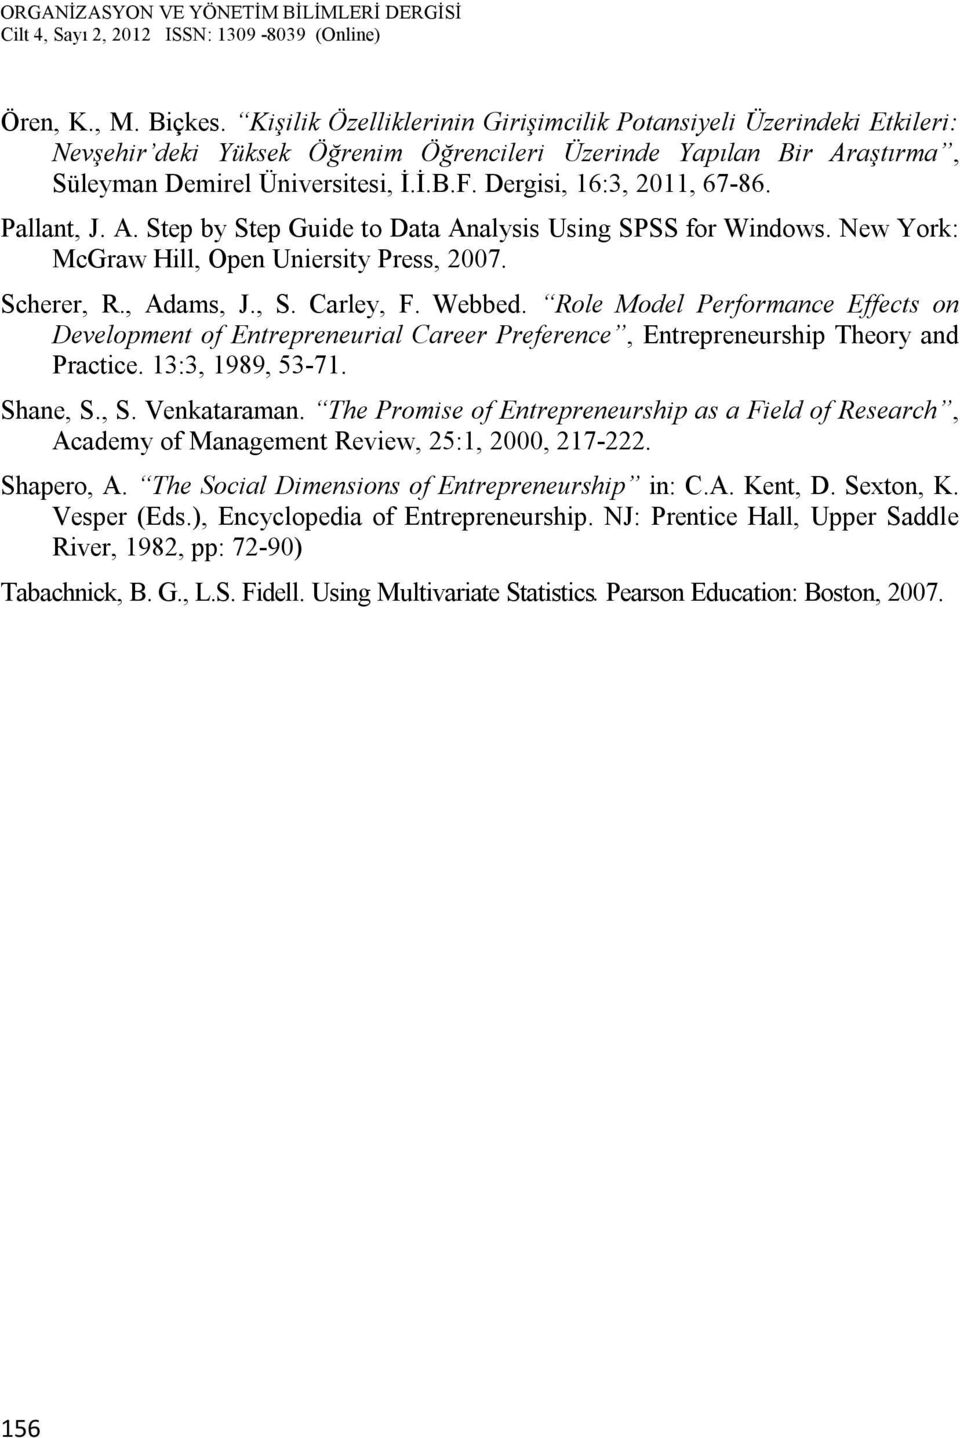 Role Model Performance Effects on Development of Entrepreneurial Career Preference, Entrepreneurship Theory and Practice. 13:3, 1989, 53-71. Shane, S., S. Venkataraman.